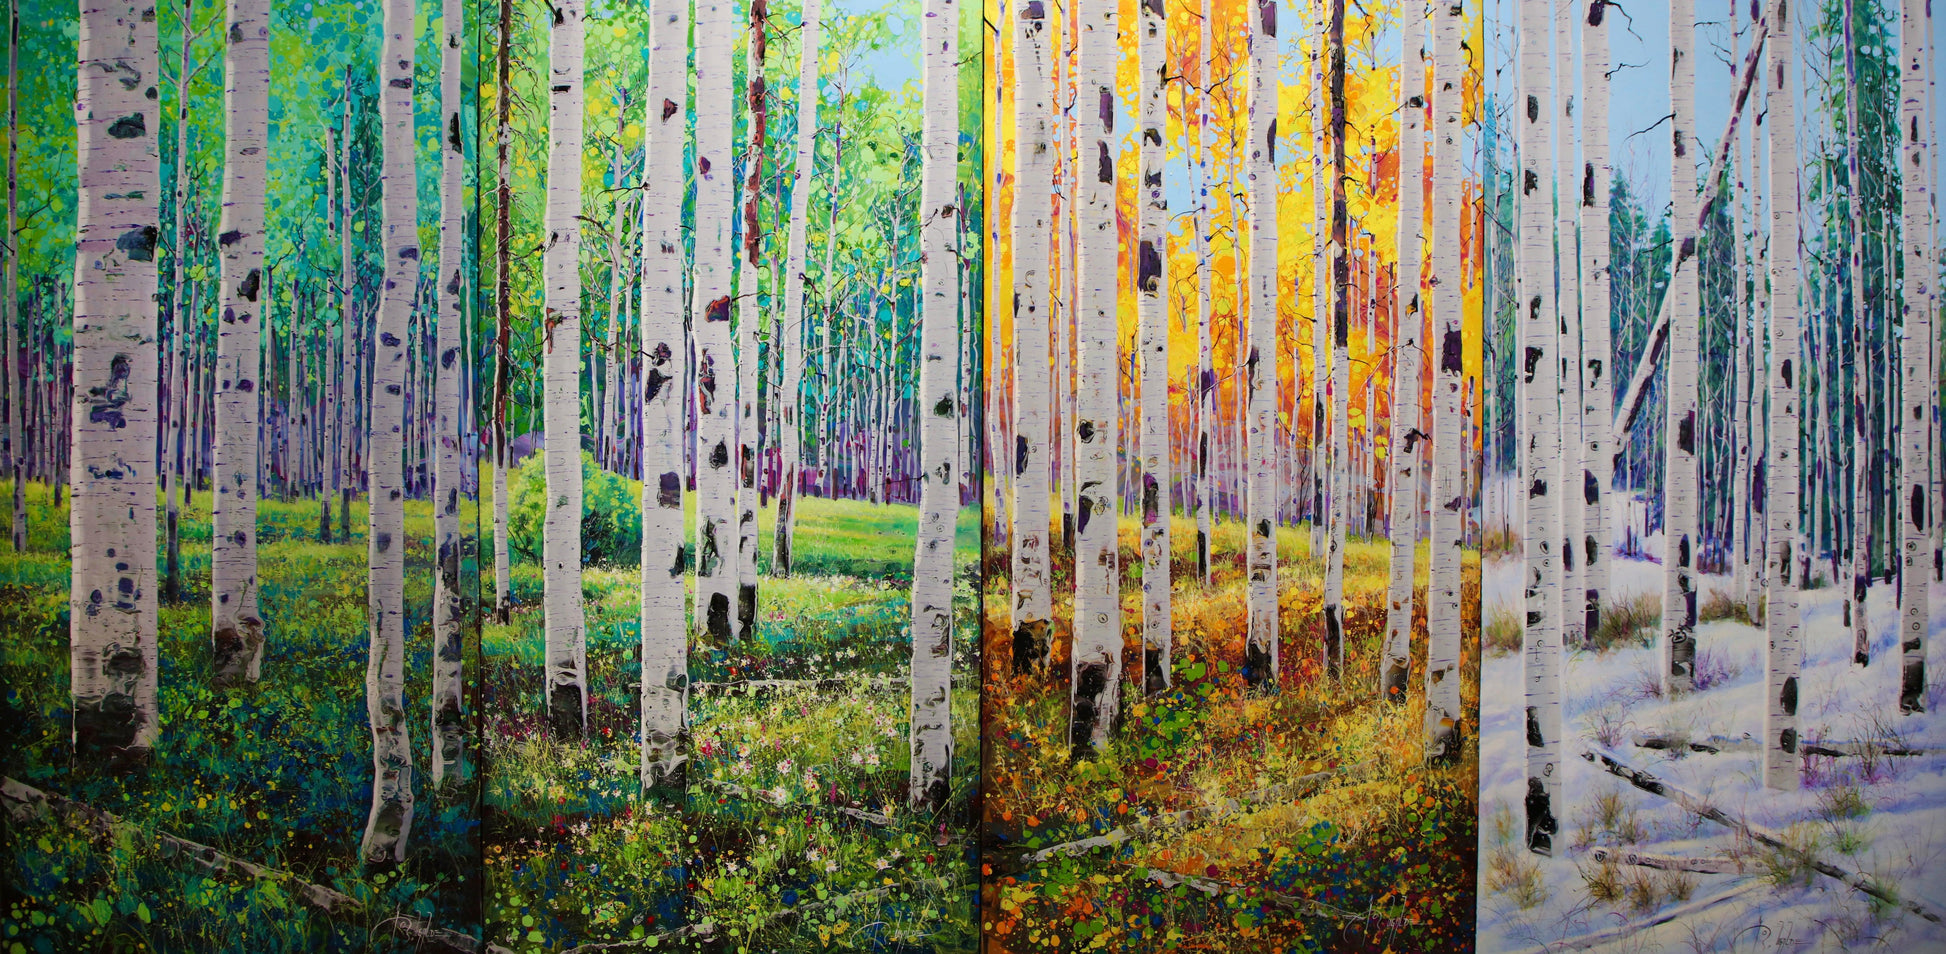 Aspens Four Seasons-Painting-Roberto Ugalde-Sorrel Sky Gallery